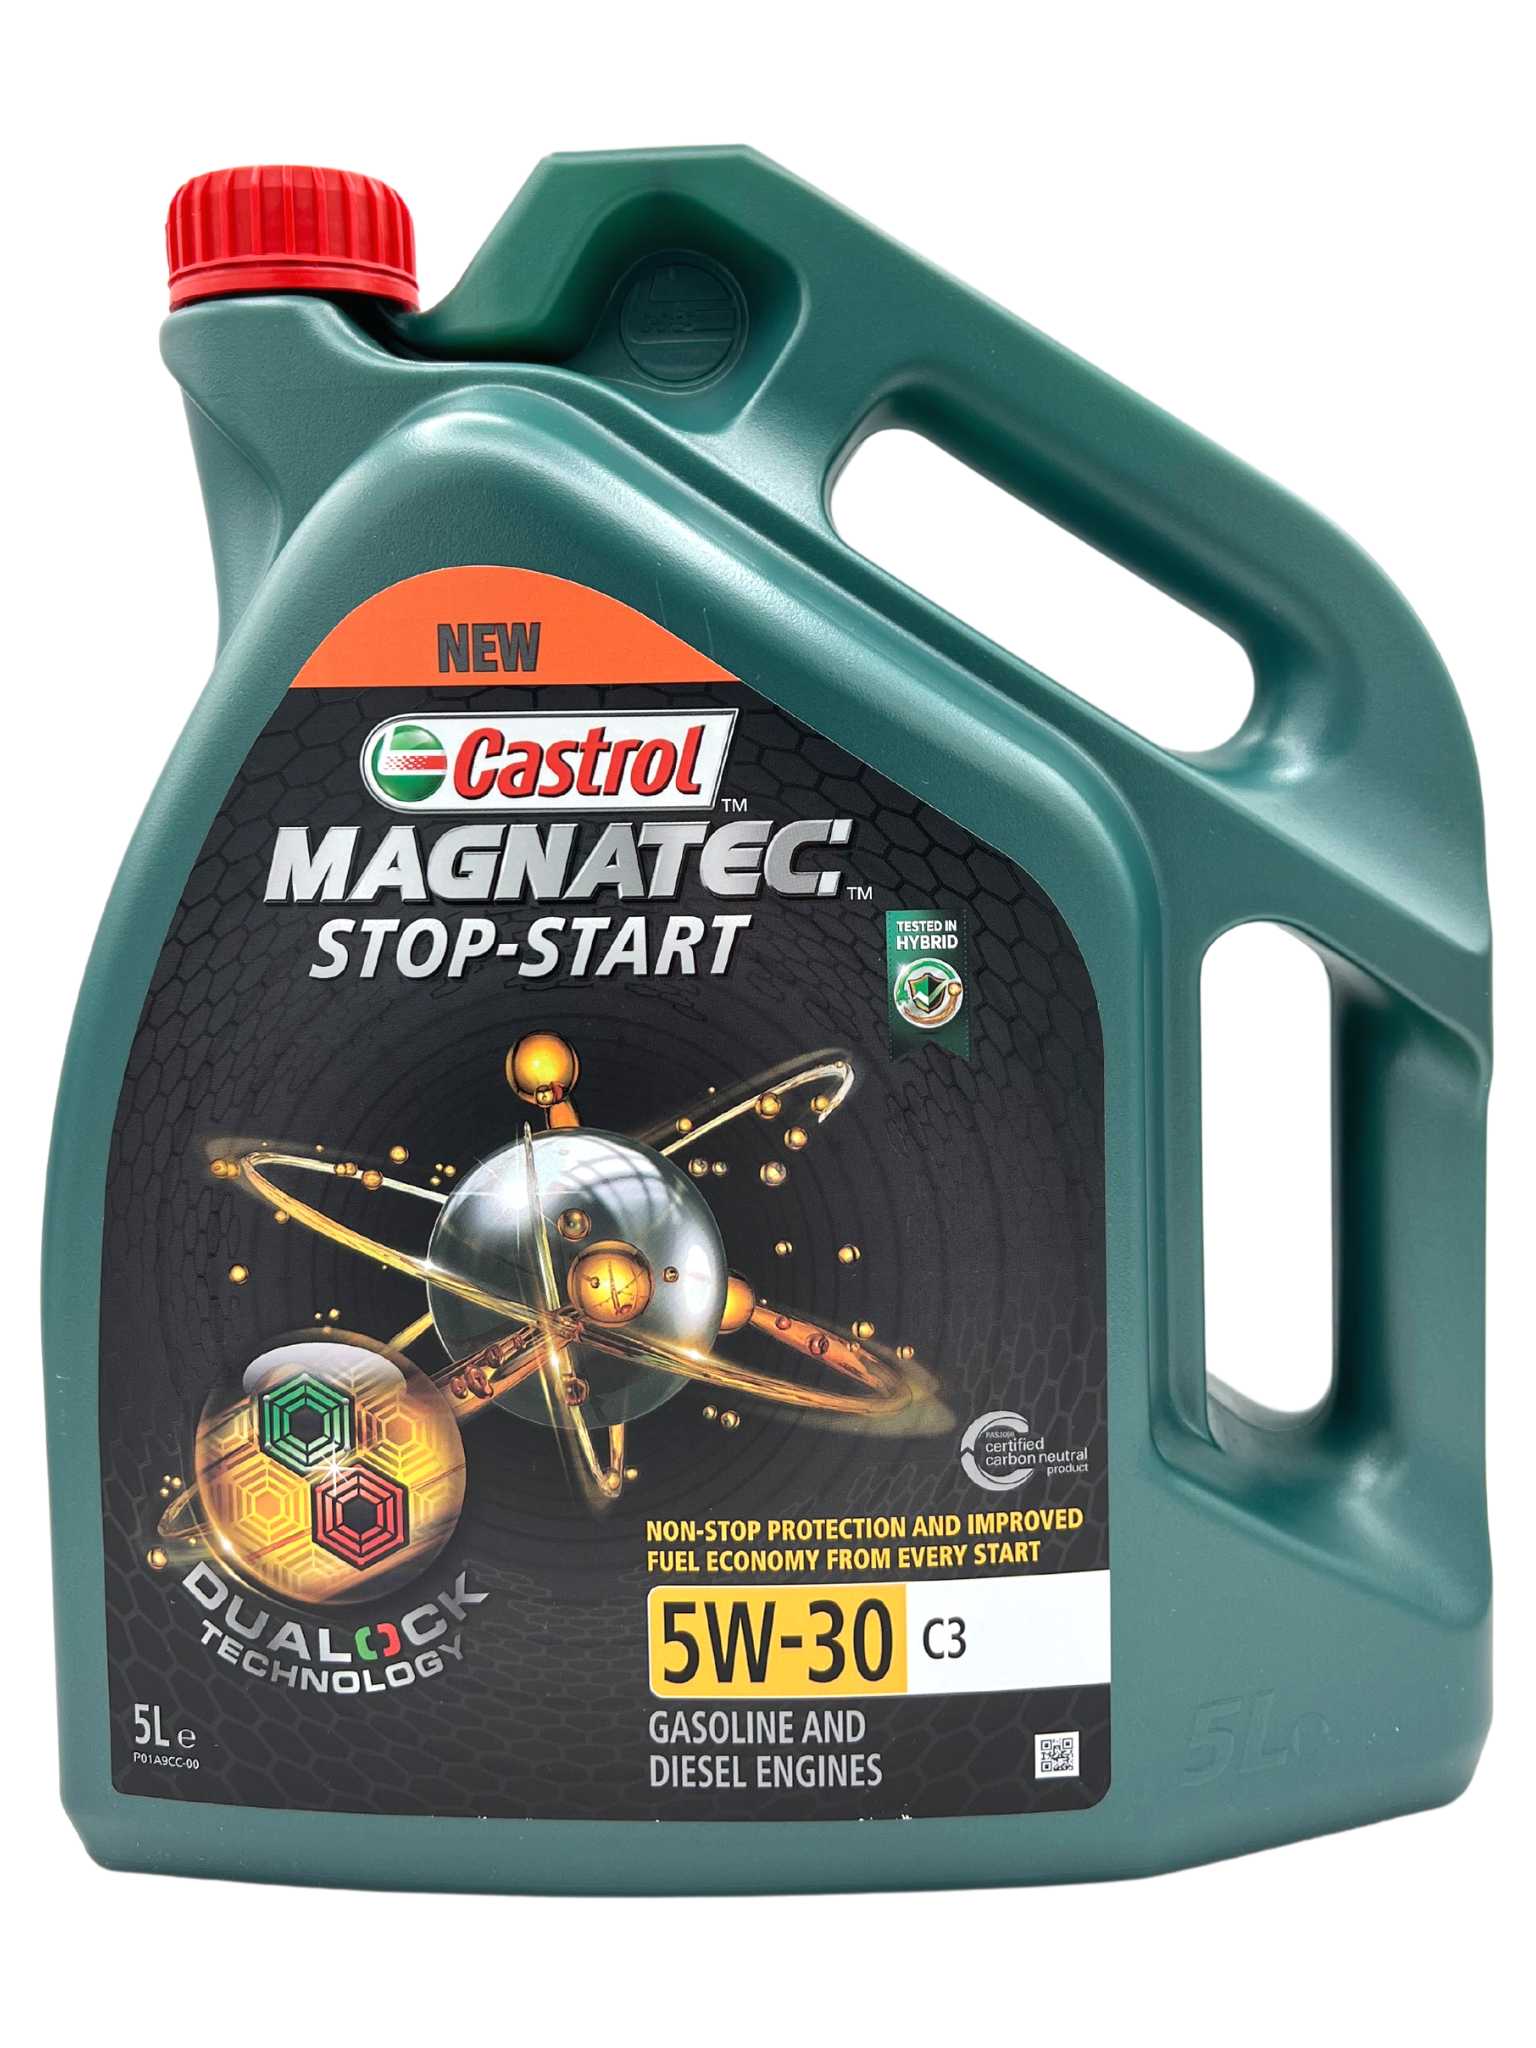 Castrol Magnatec Stop-Start 5W-30 C3 5 Liter